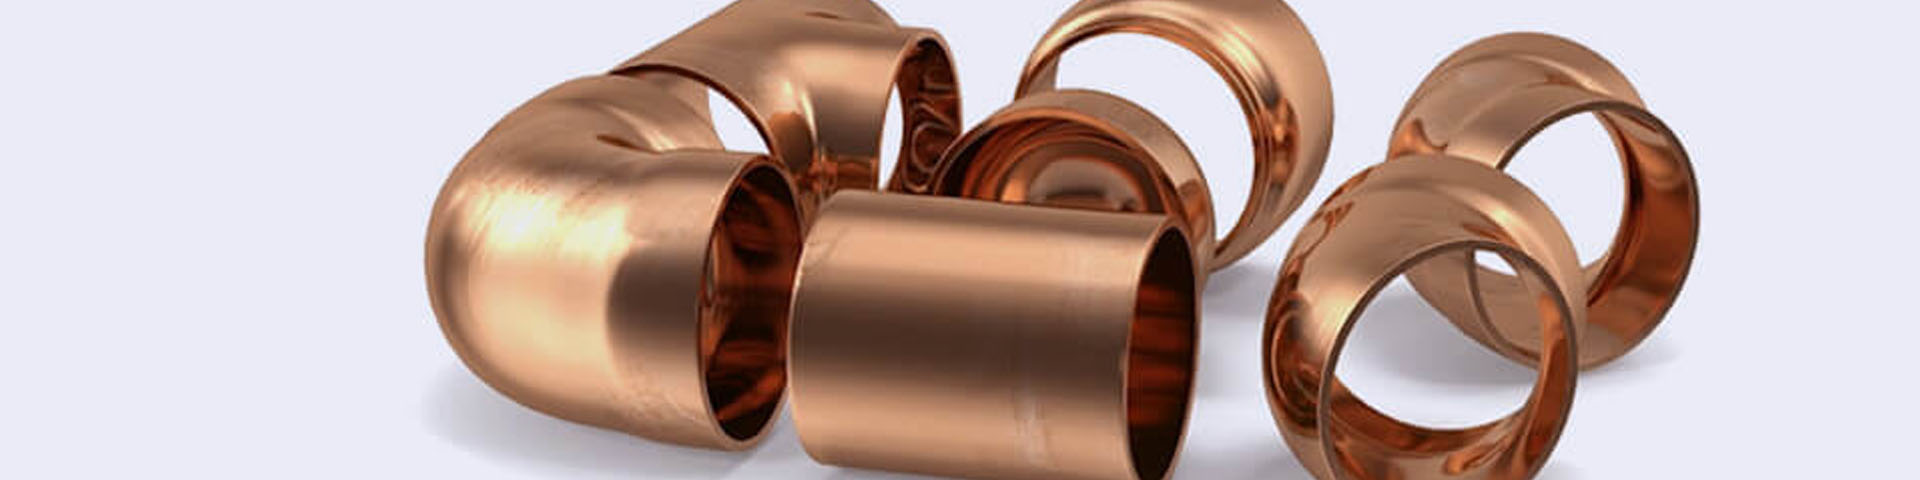 copper nickel buttweld fittings supplier